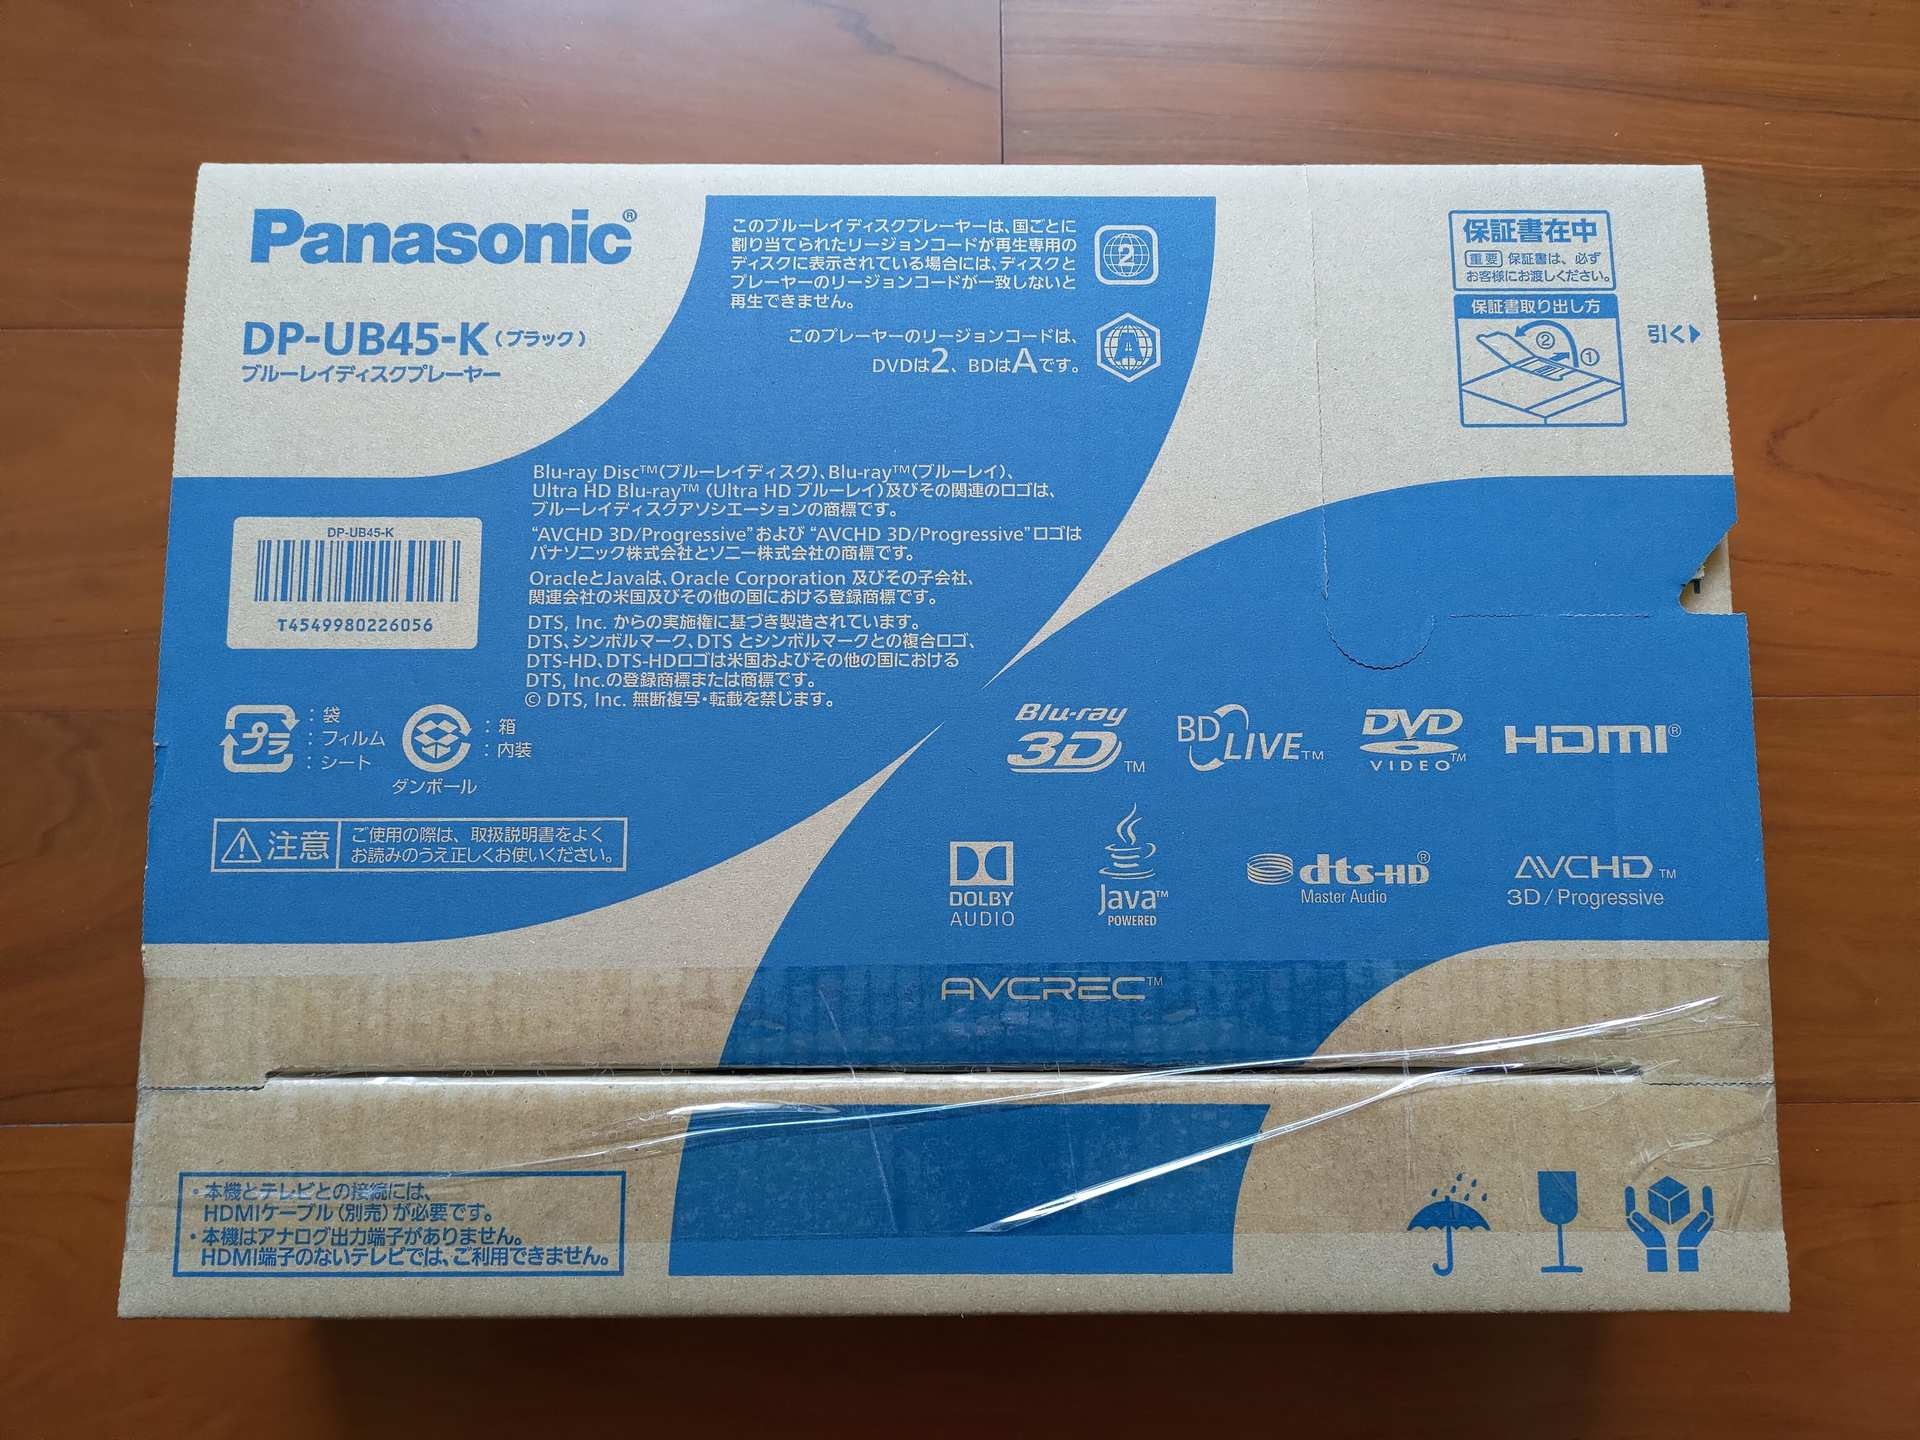 Panasonic DP-UB45-K ブルーレイディスクプレーヤー 高級 - プレーヤー